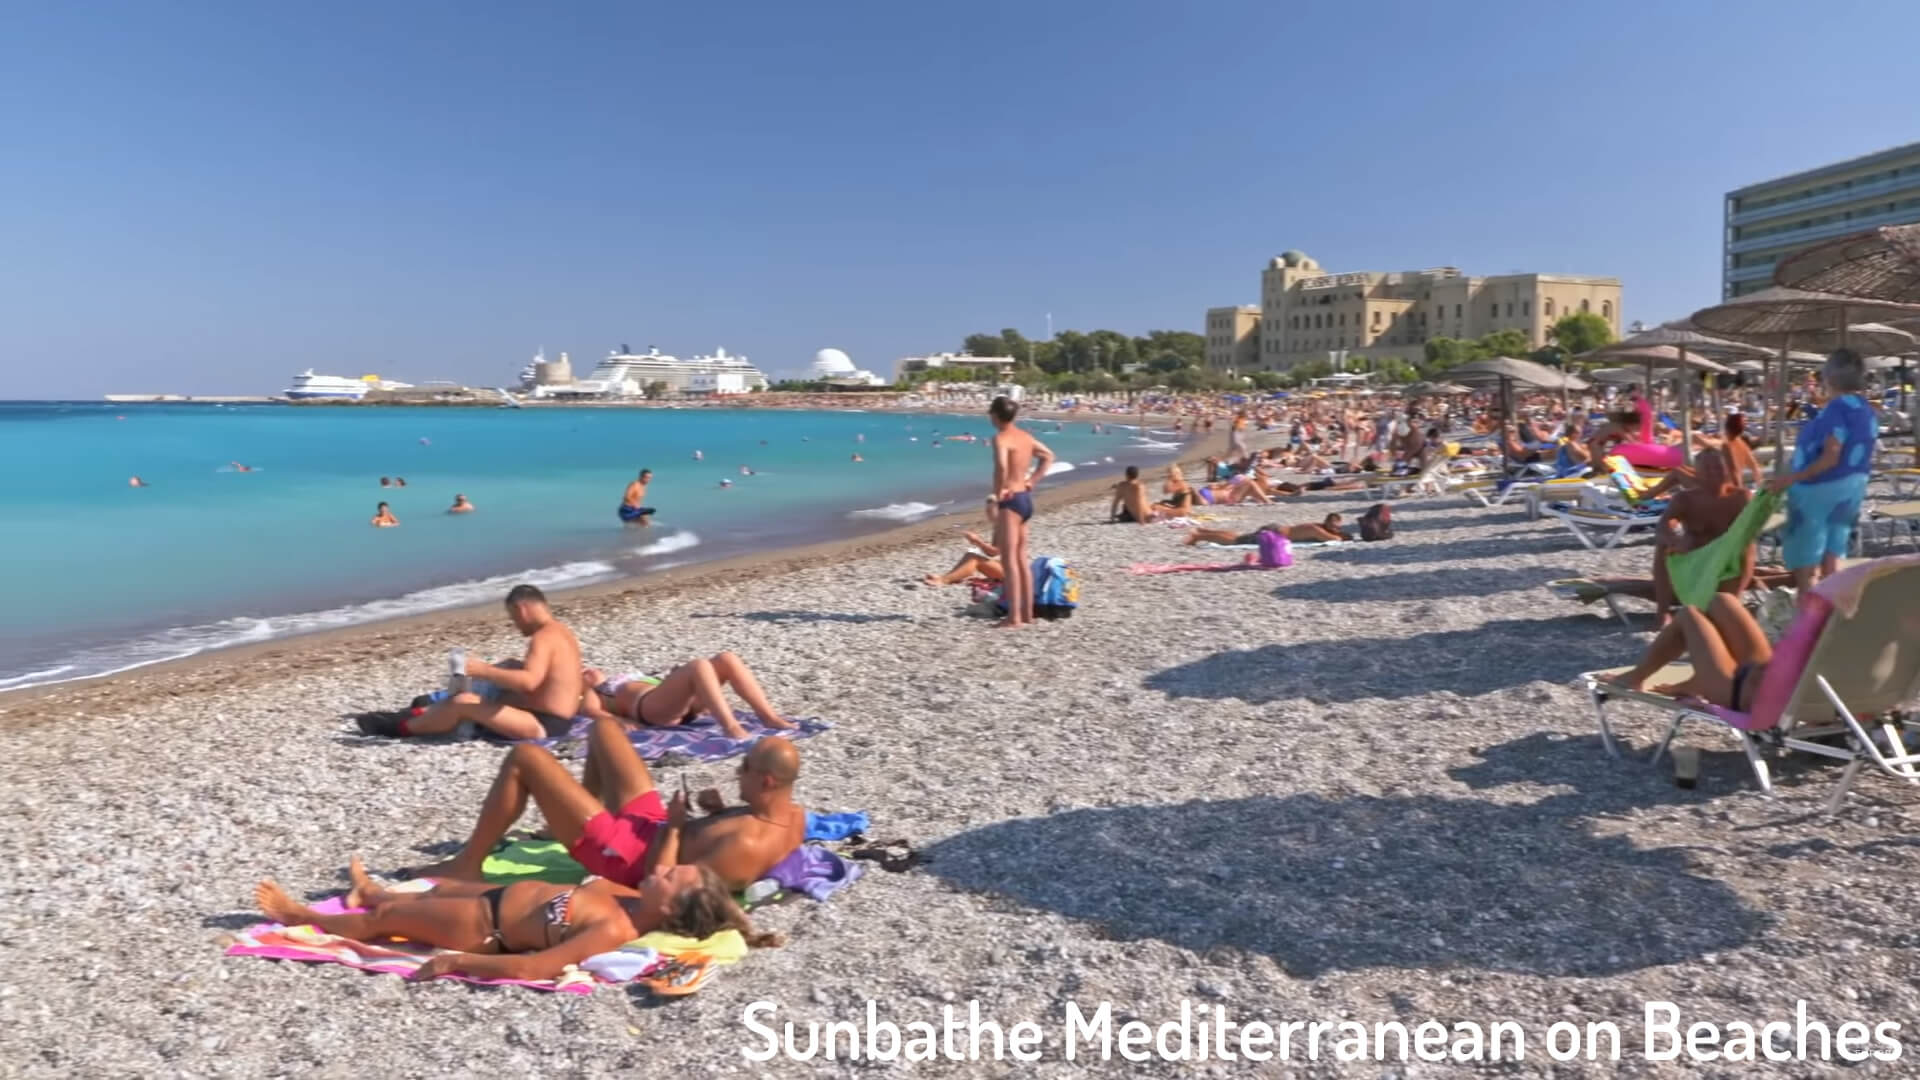 Sunbathe Mediterranean on Beaches